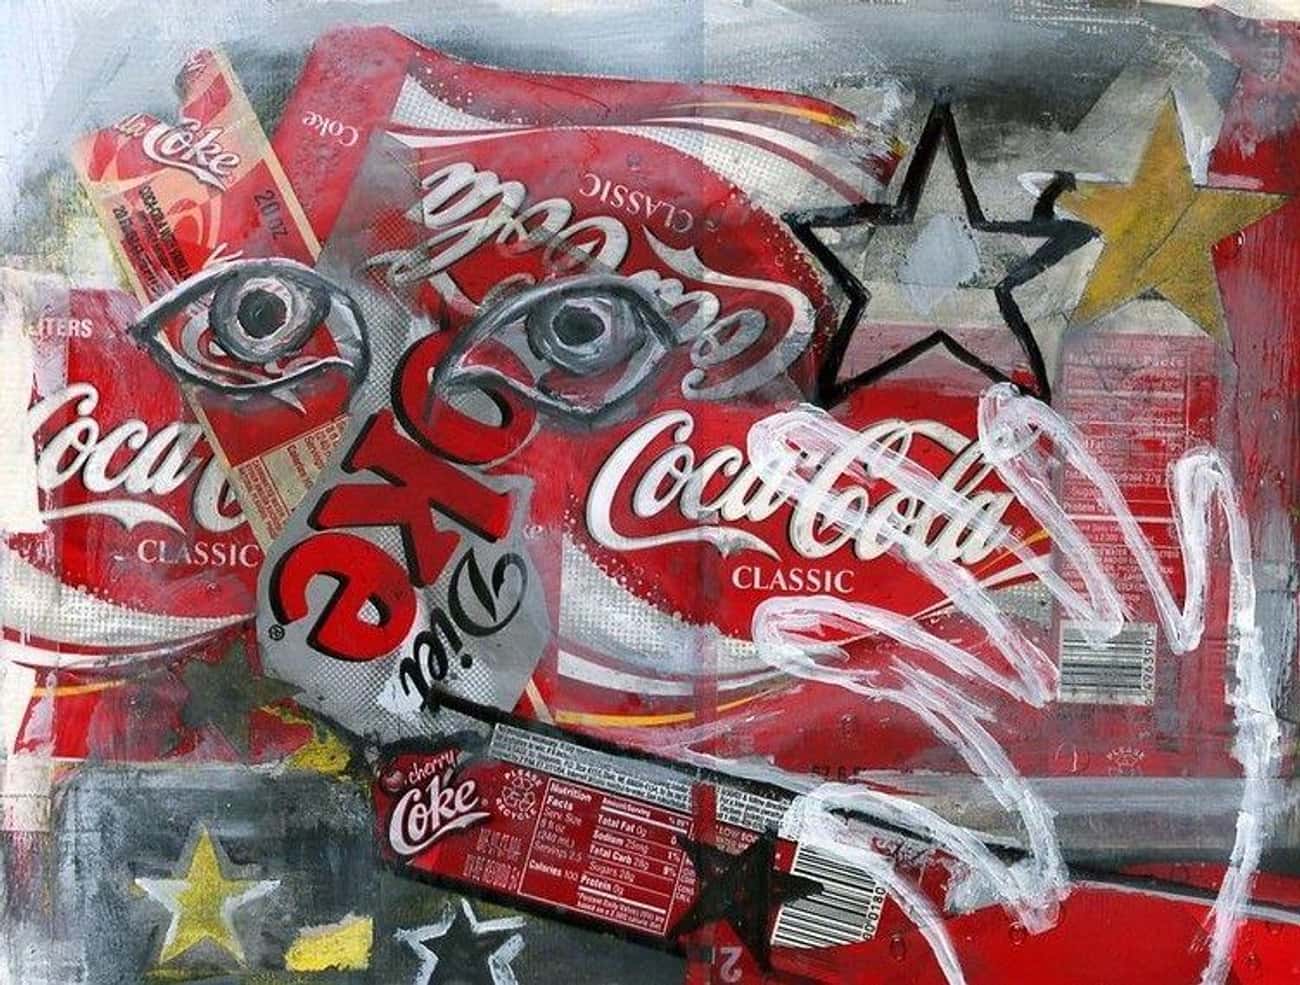 Coca-Cola Has Never Patented Its Recipe